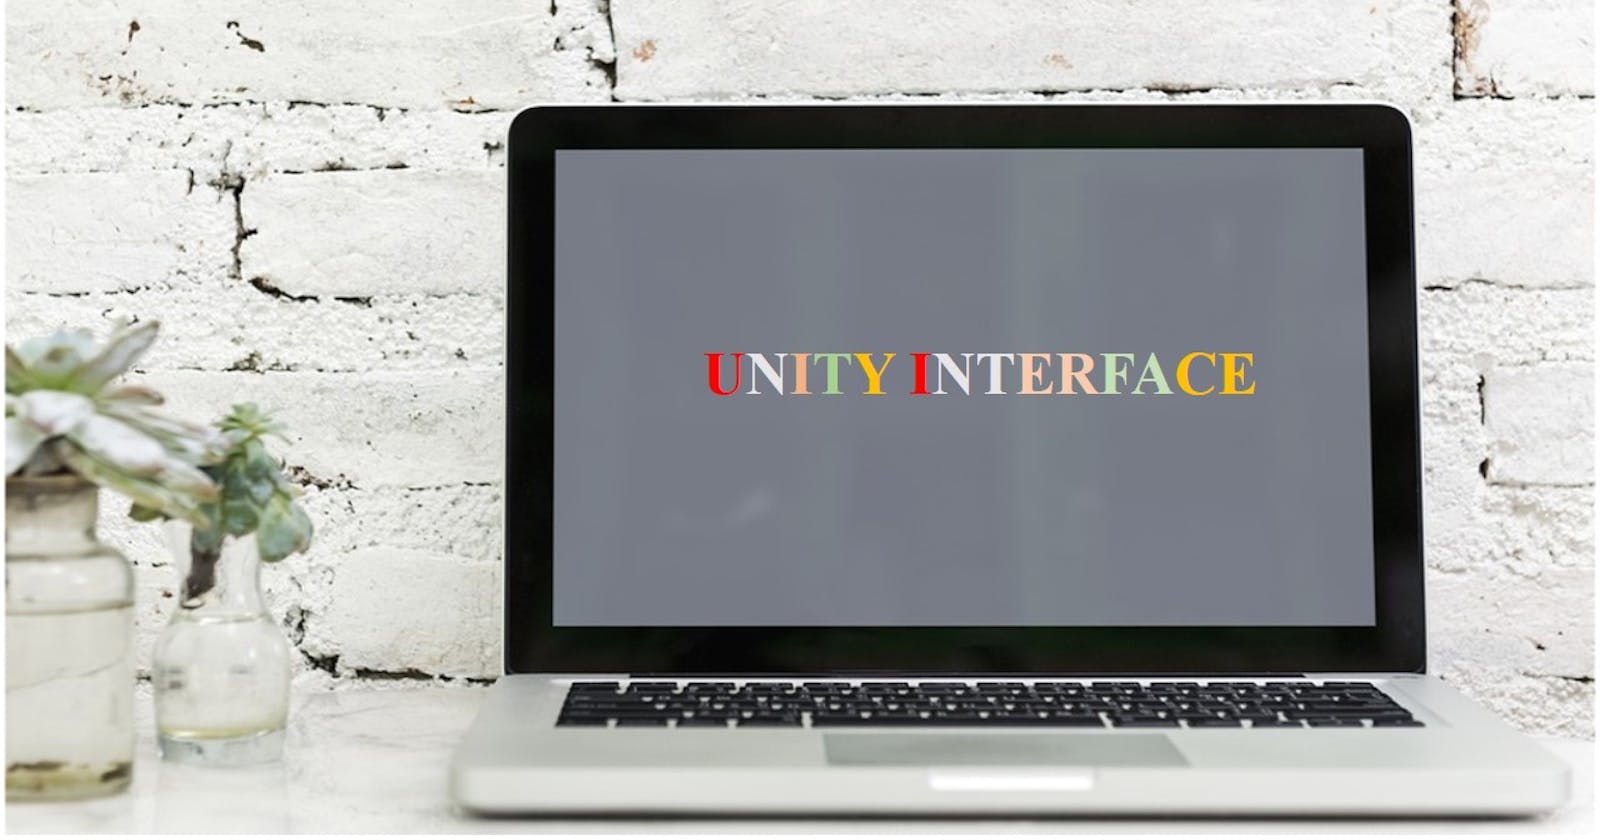 Unity Interface